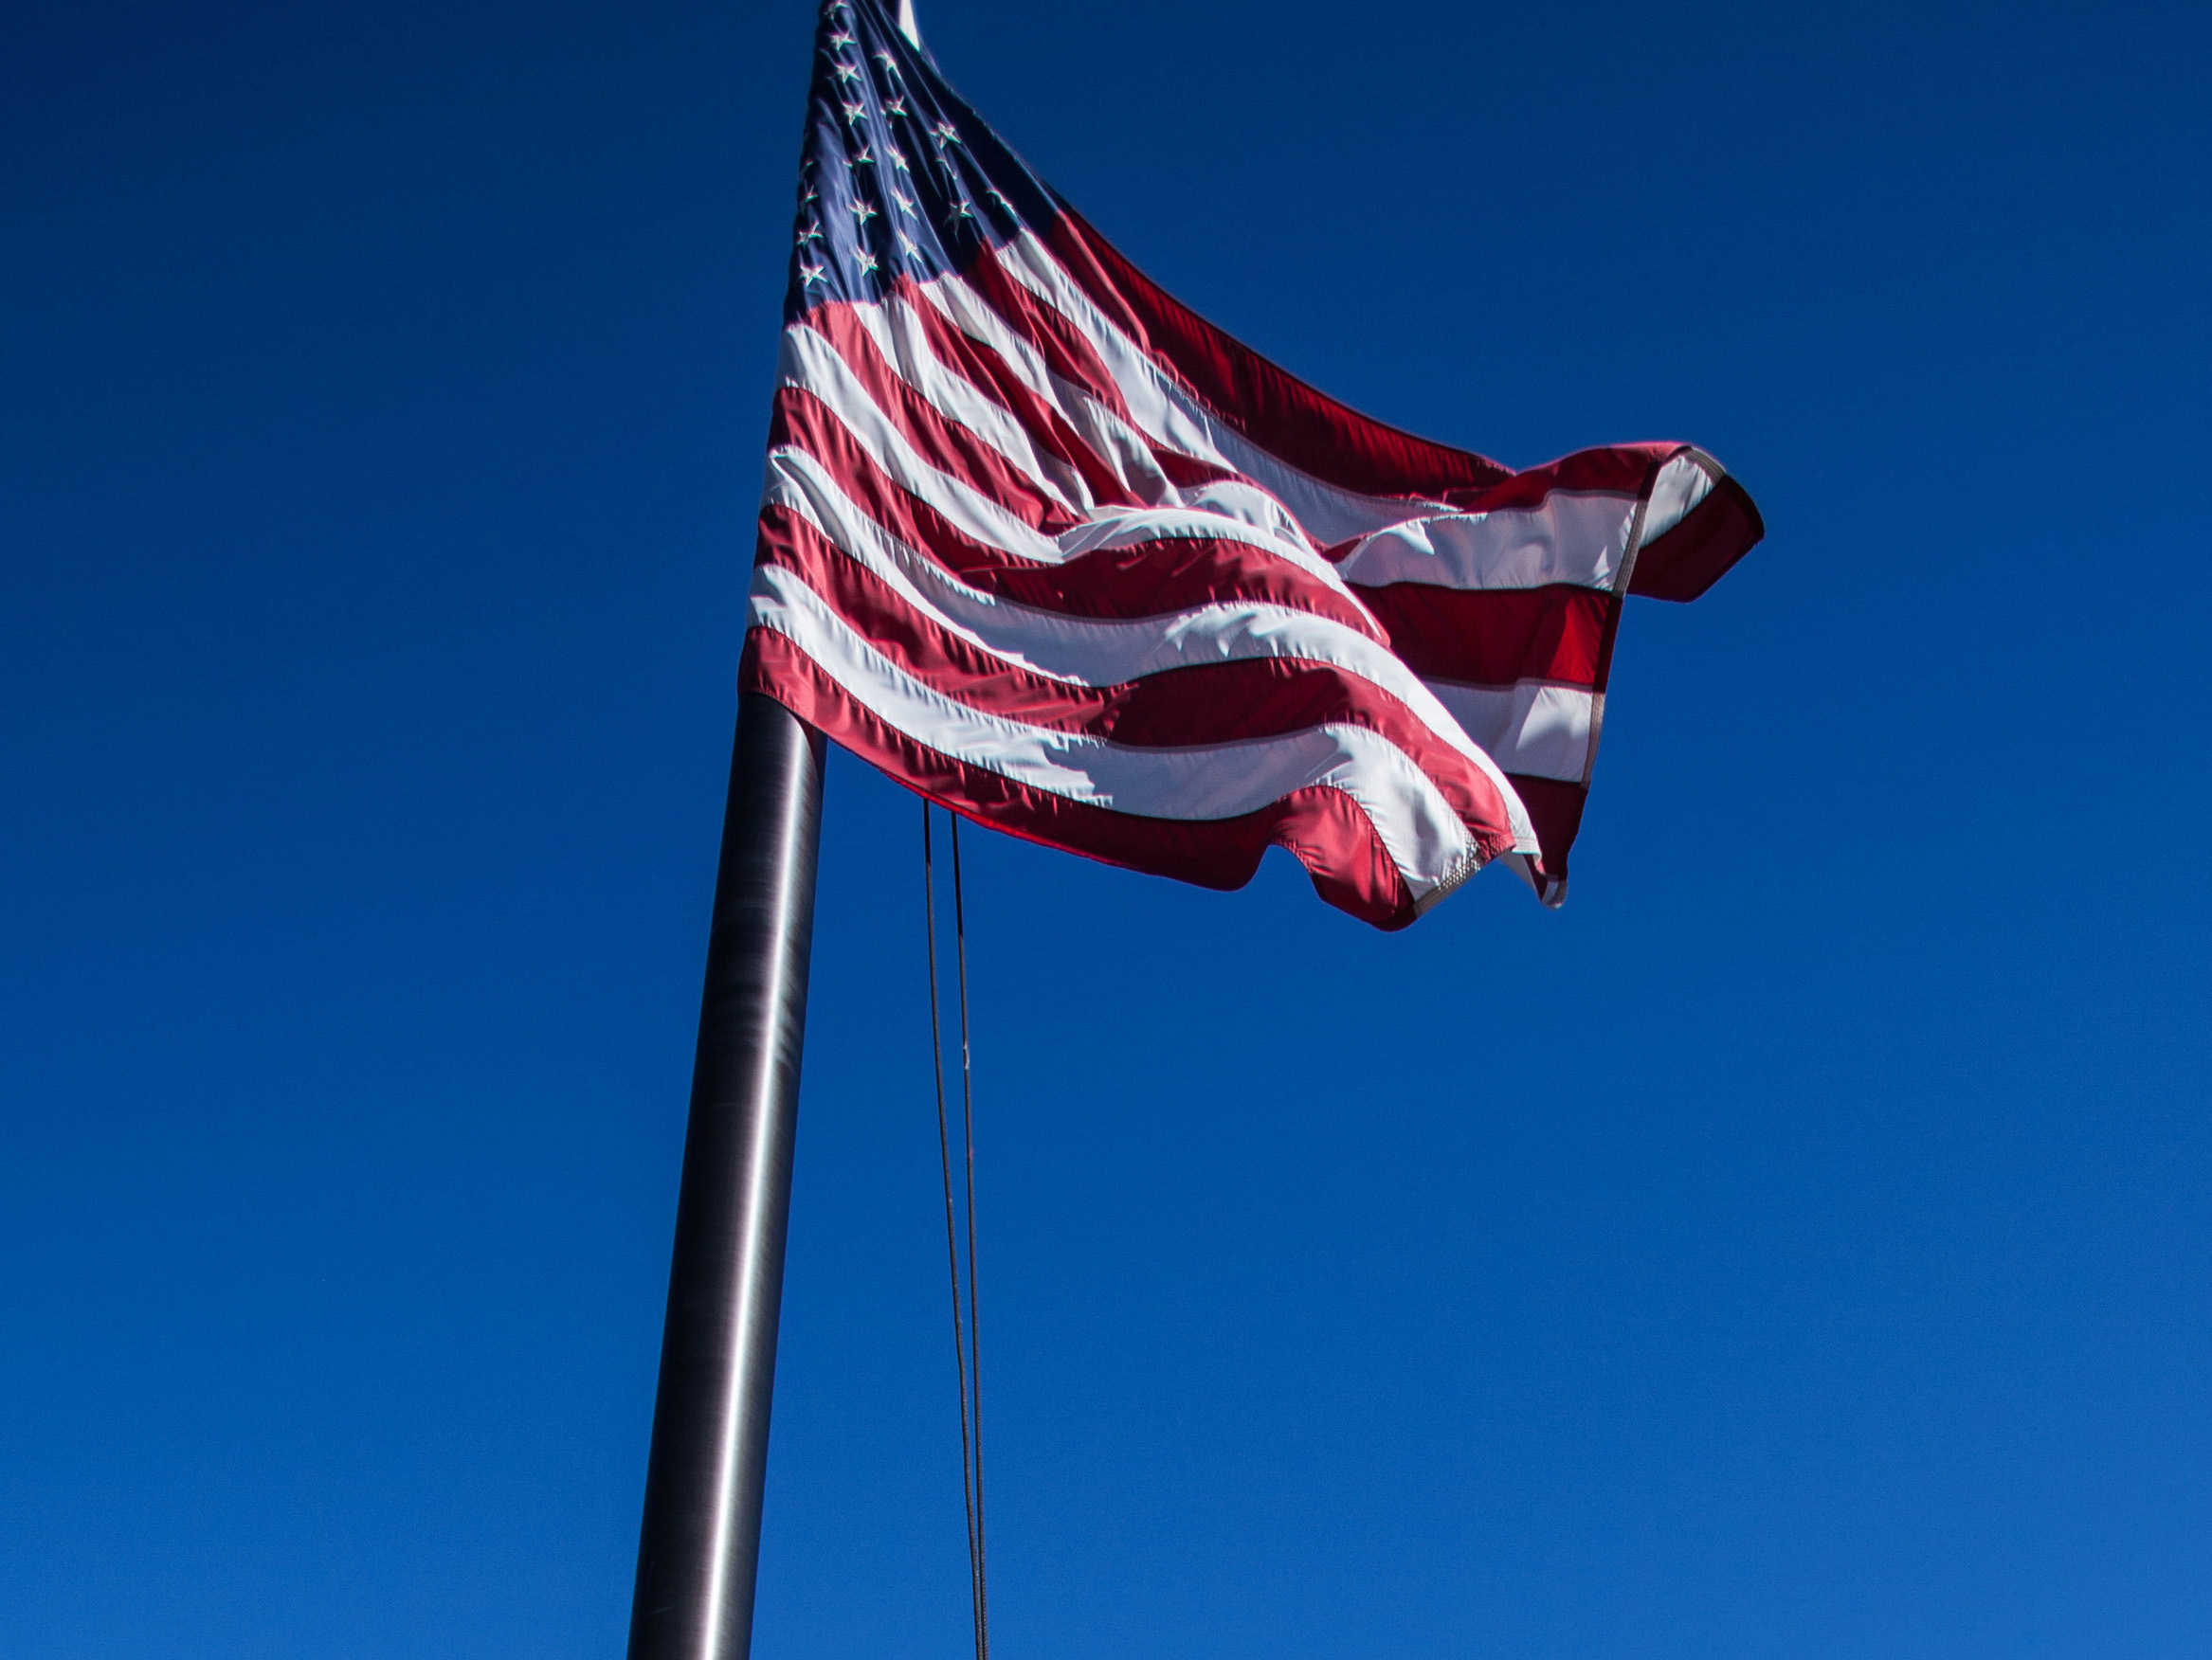 American flag flying outside on a pole